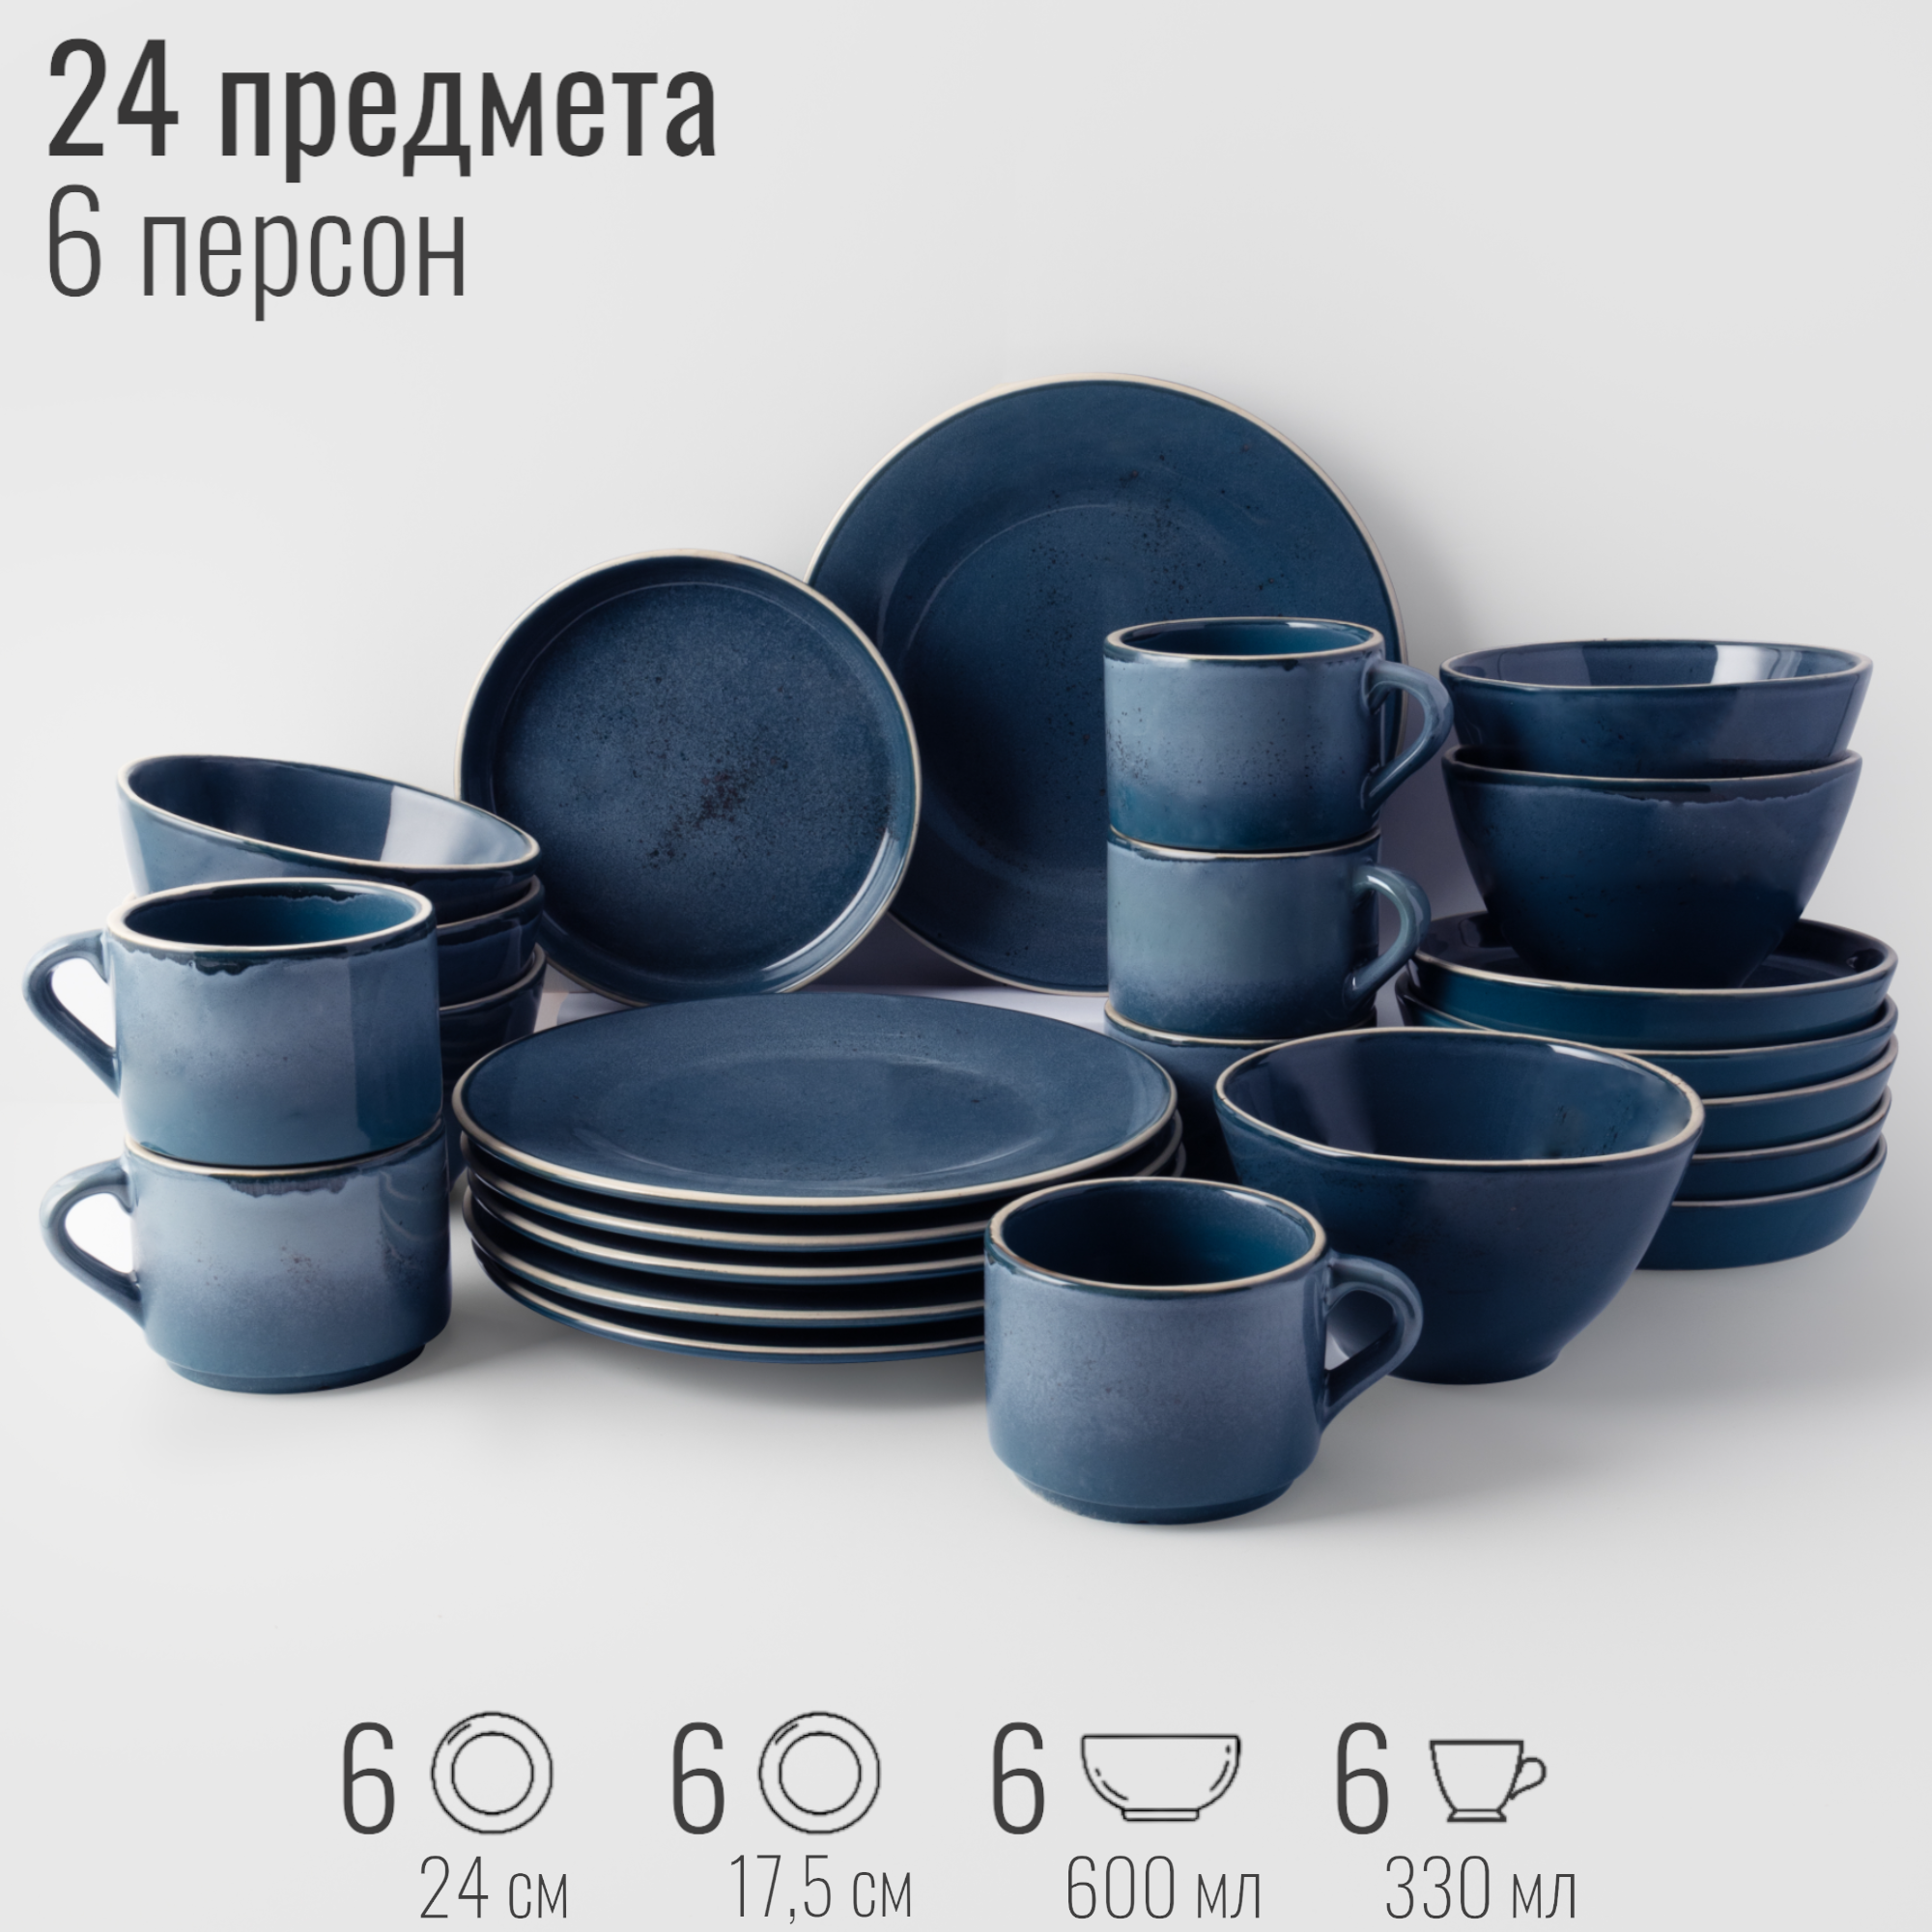 Посуда столовая набор на 6 персон, 24 предмета "Бордер", фарфор, сервиз обеденный Блу Реаттиво